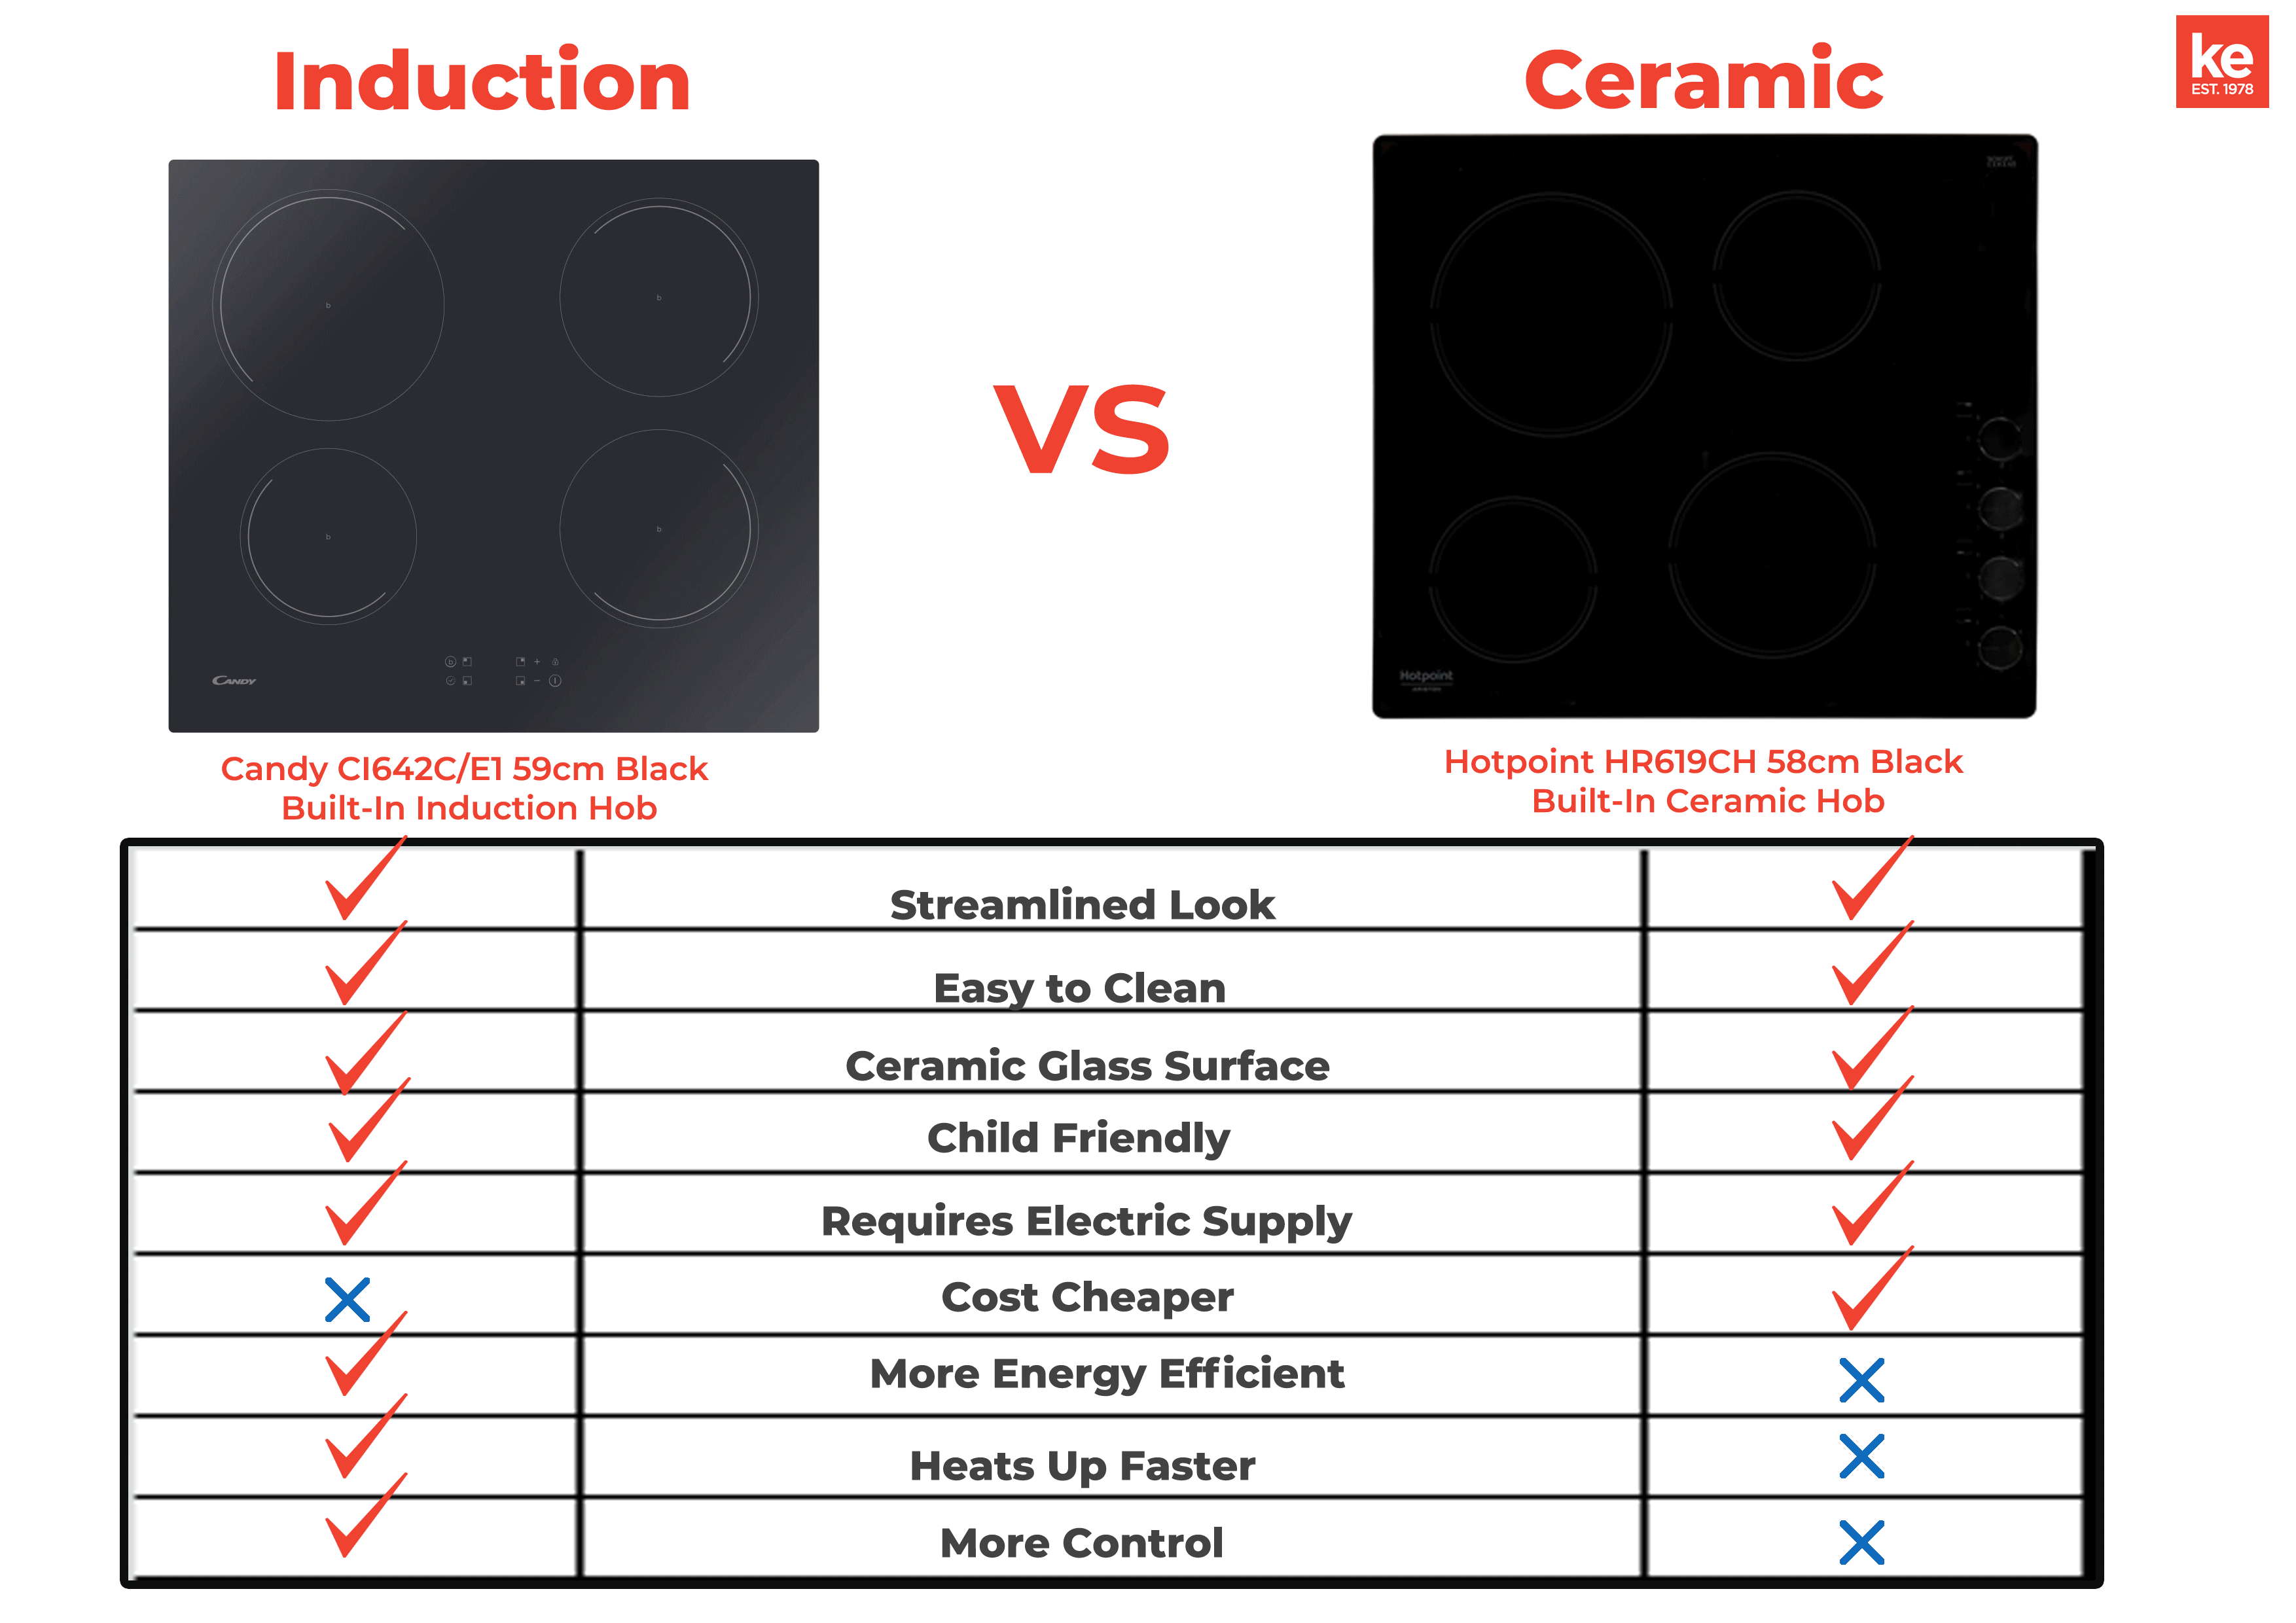 https://www.kitchen-economy.co.uk/blog/image.axd?picture=/Jose/induction-vs-ceramic.gif